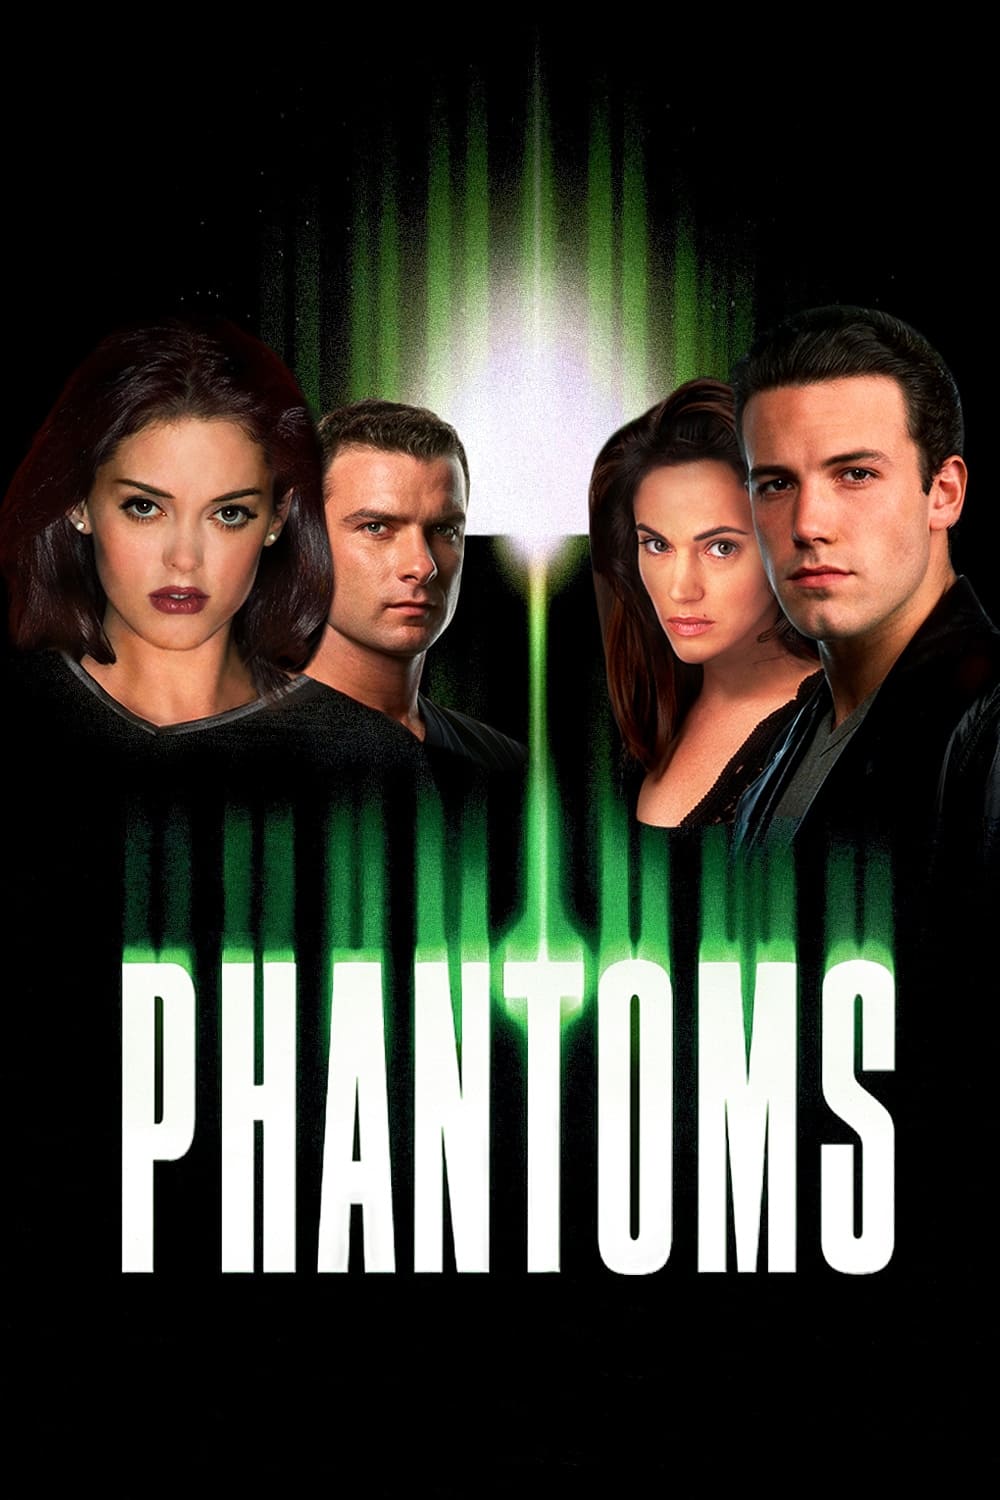 Fantasmas (Phantoms) (1998)